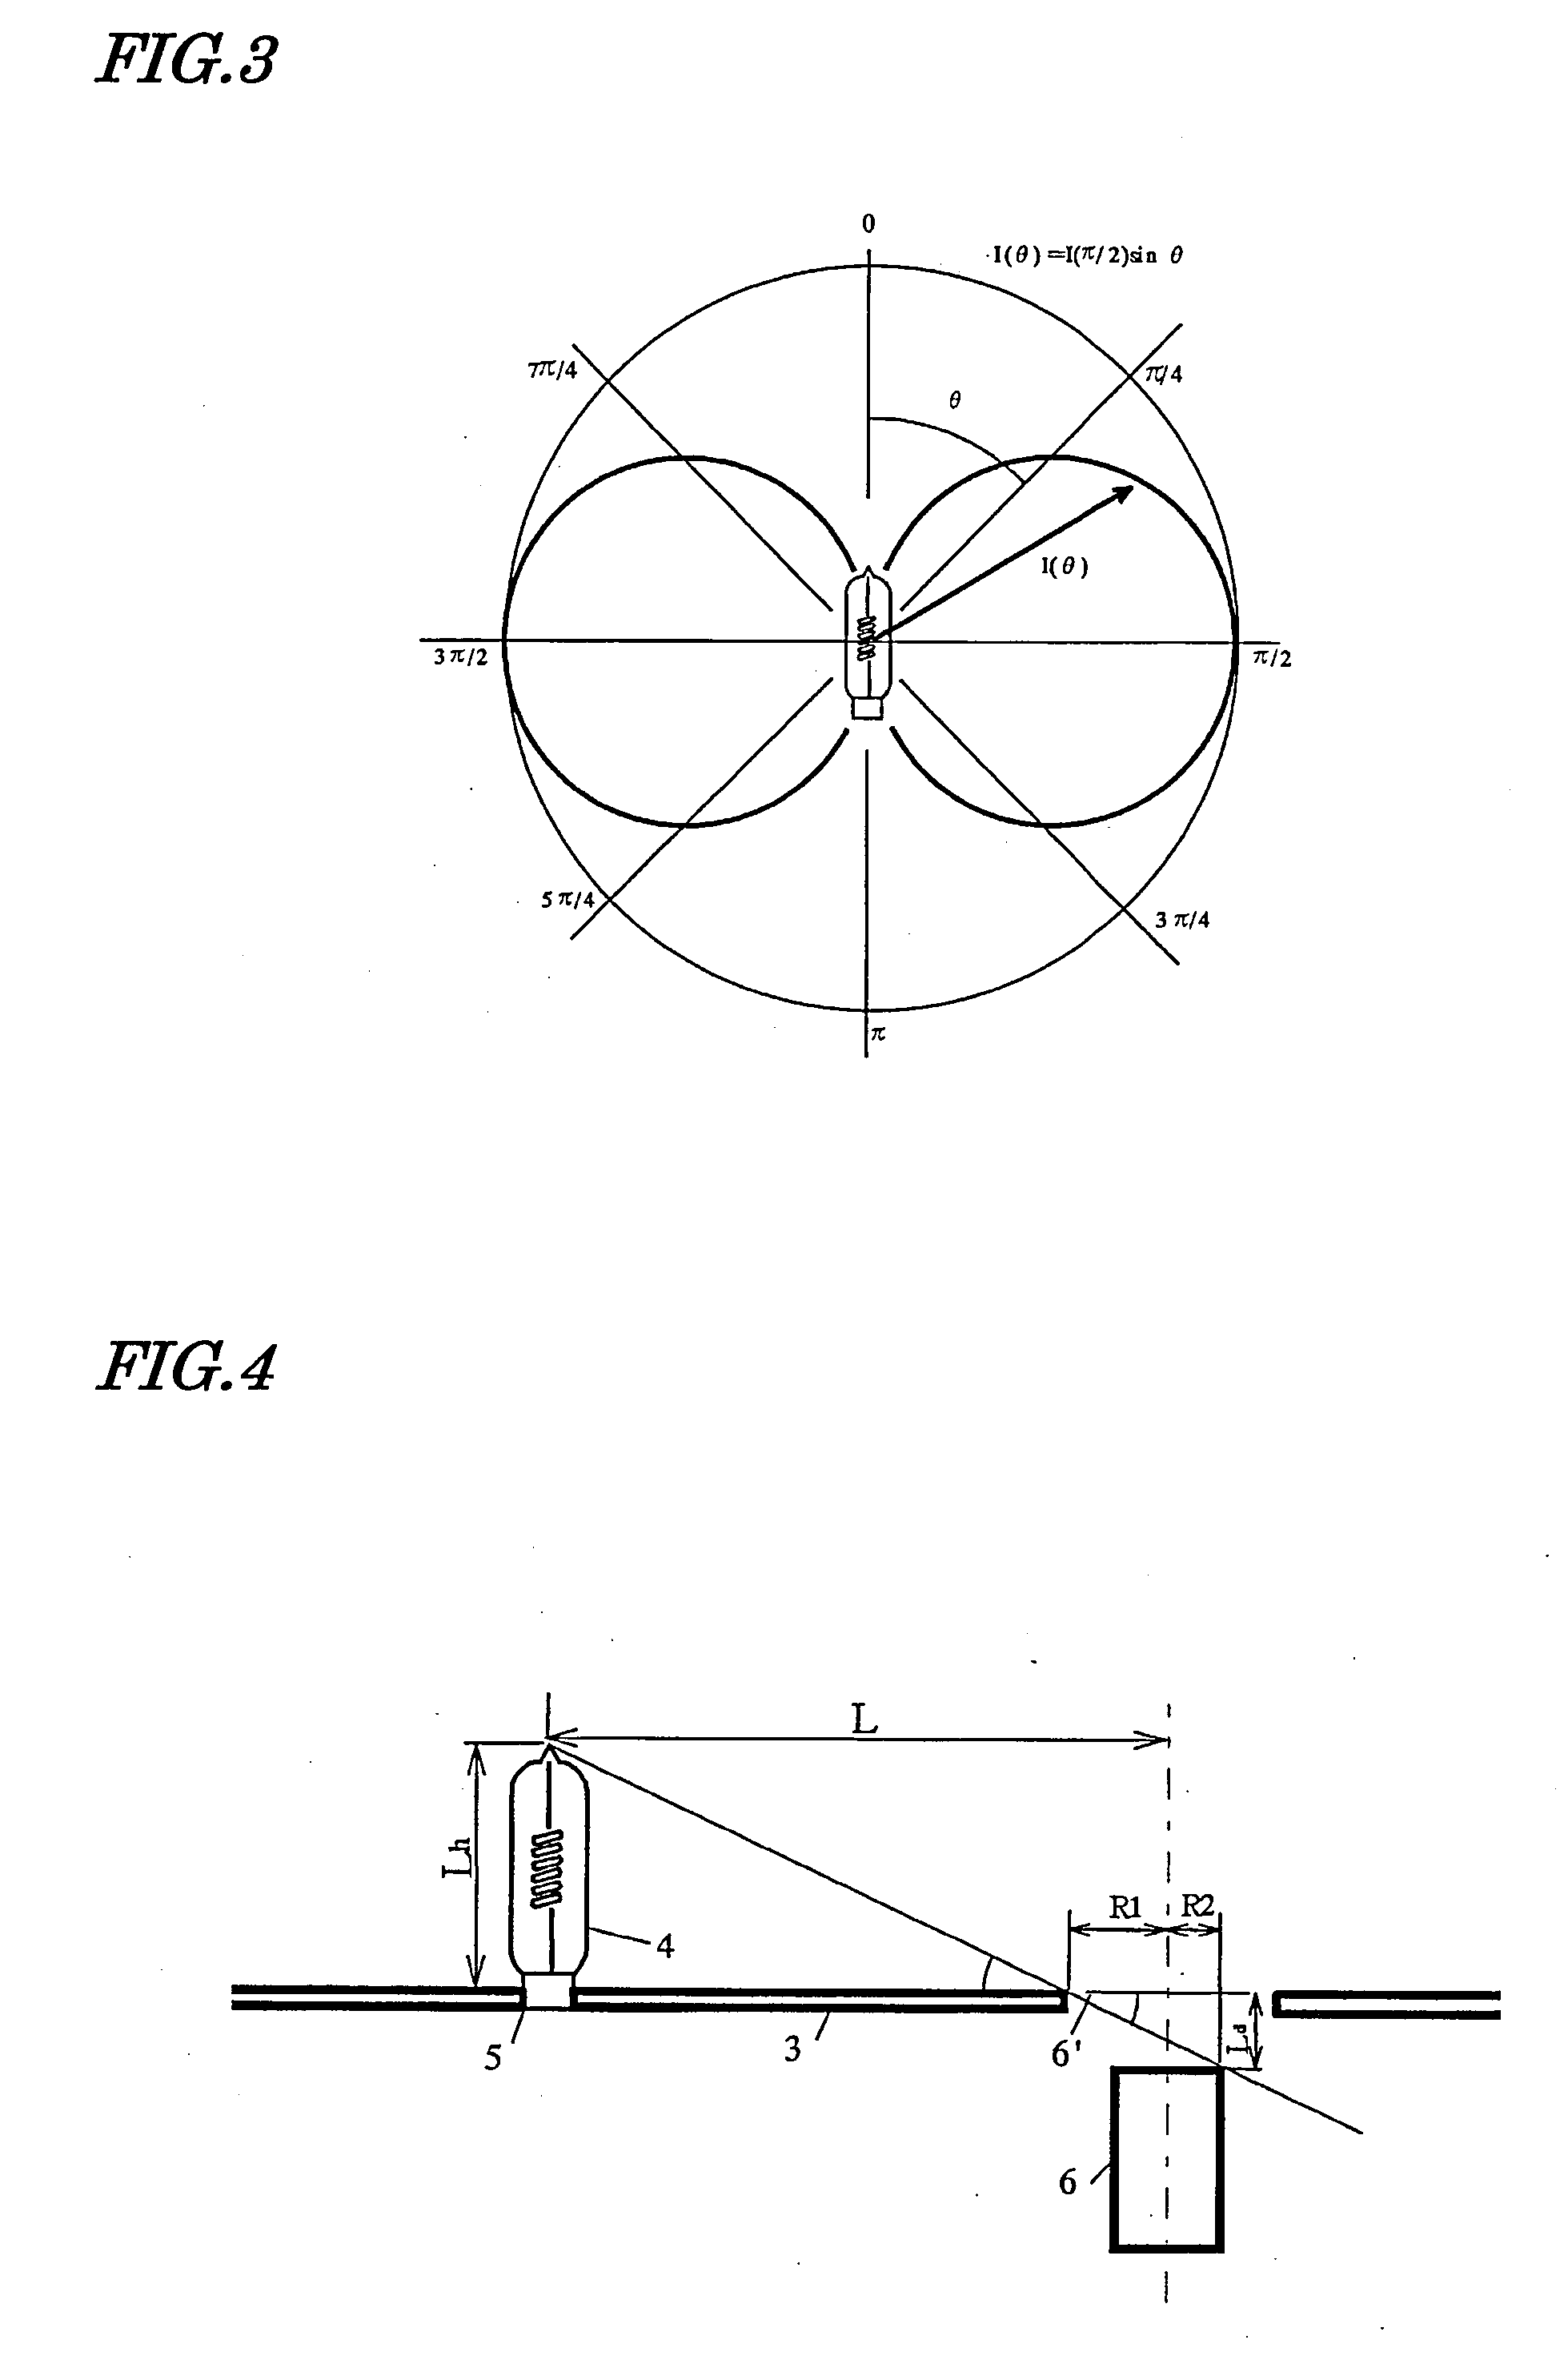 Optical measuring device